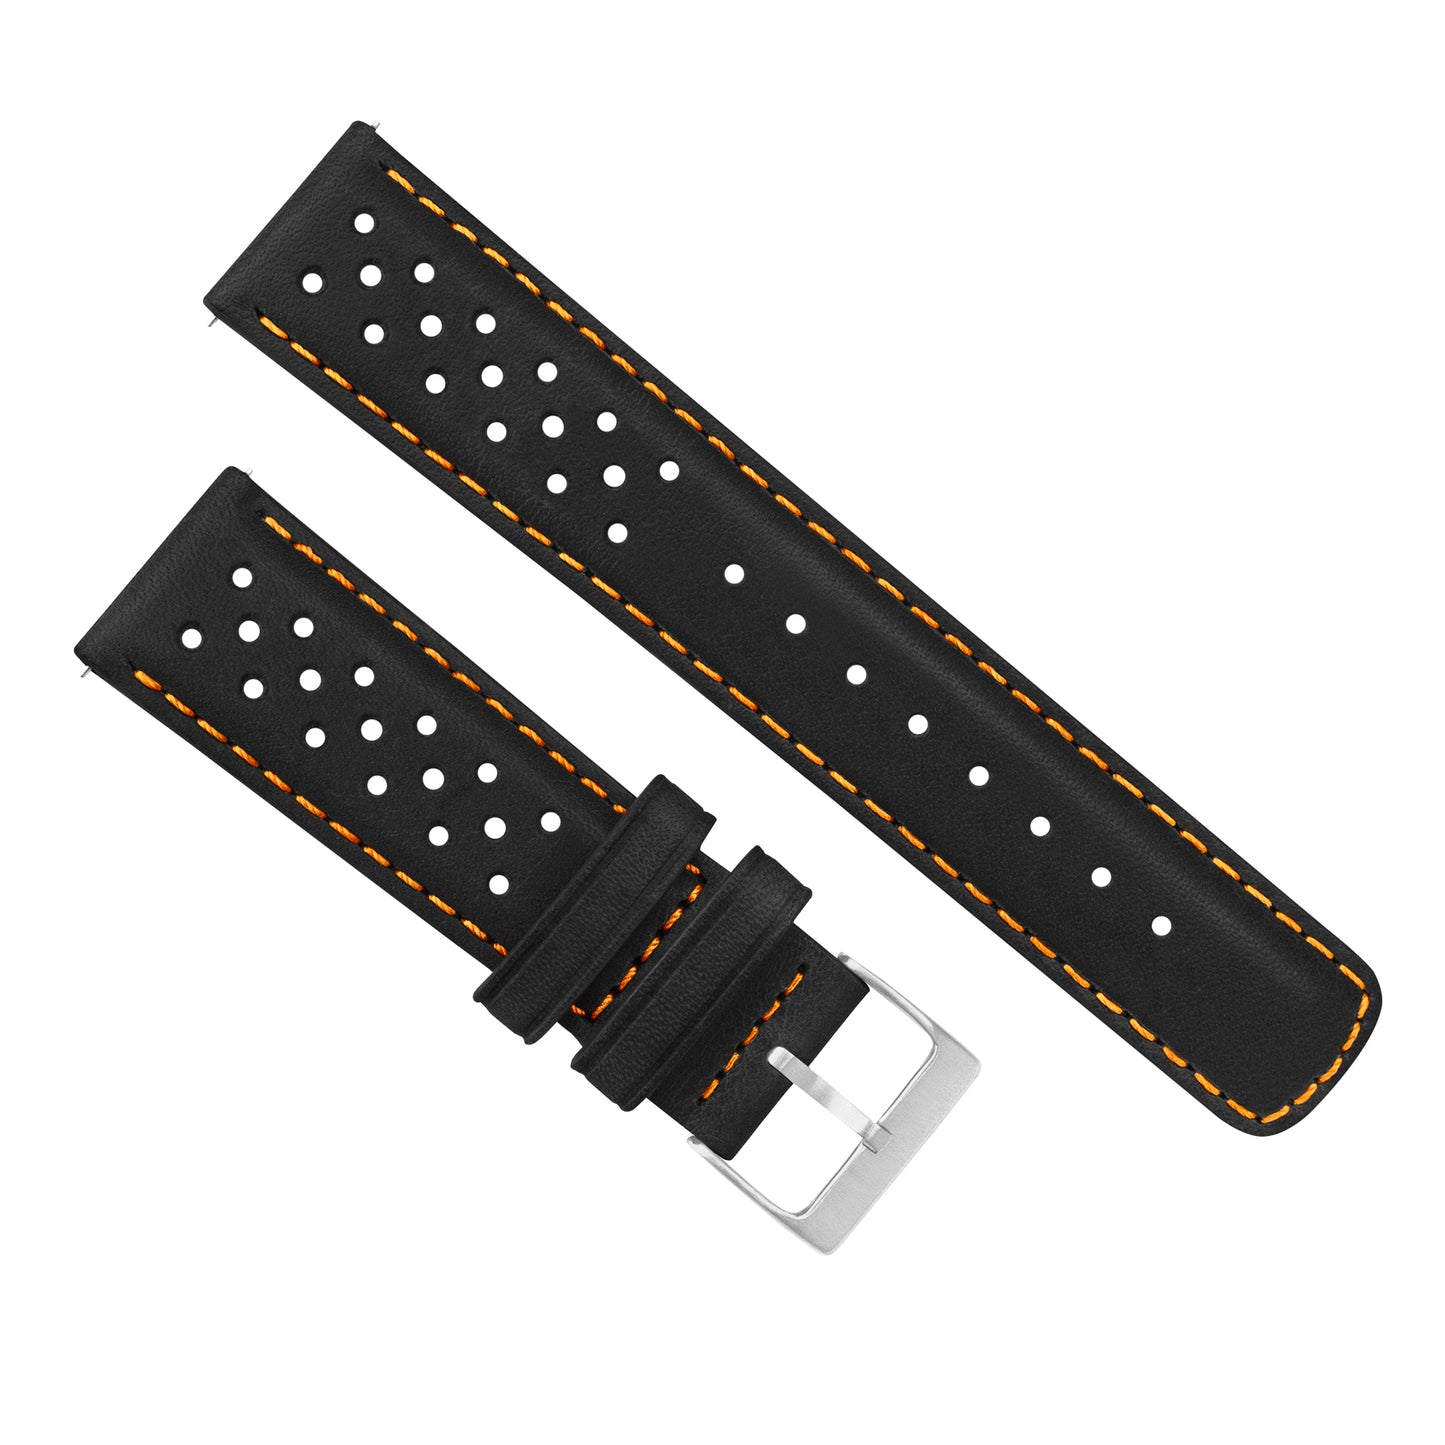 Samsung Galaxy Watch3 Racing Horween Leather Black Orange Stitch Watch Band